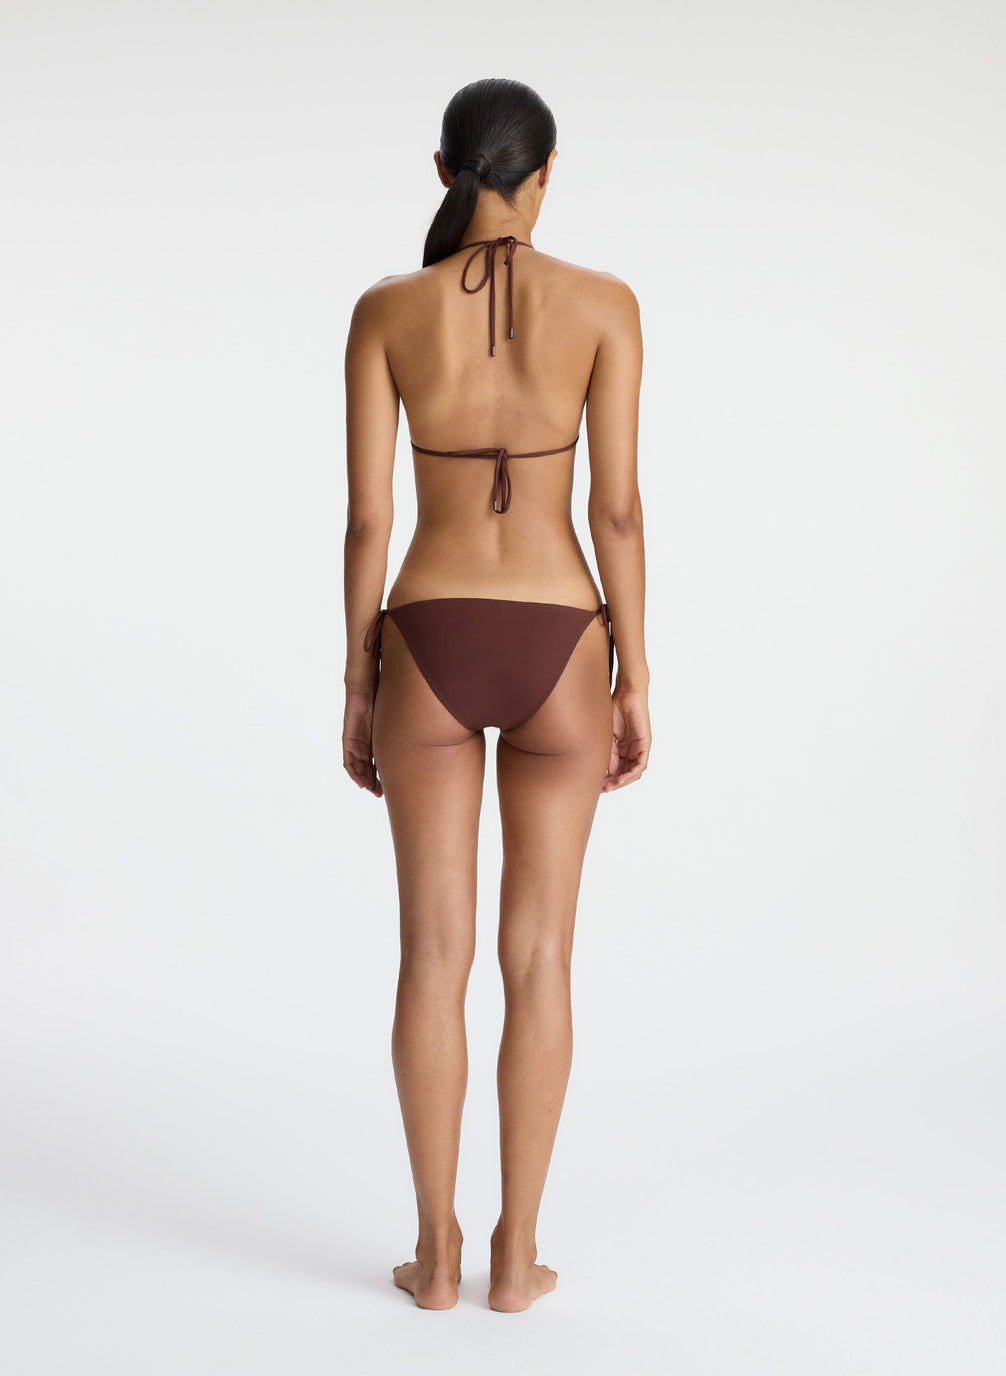 back view of woman wearing brown bikini set